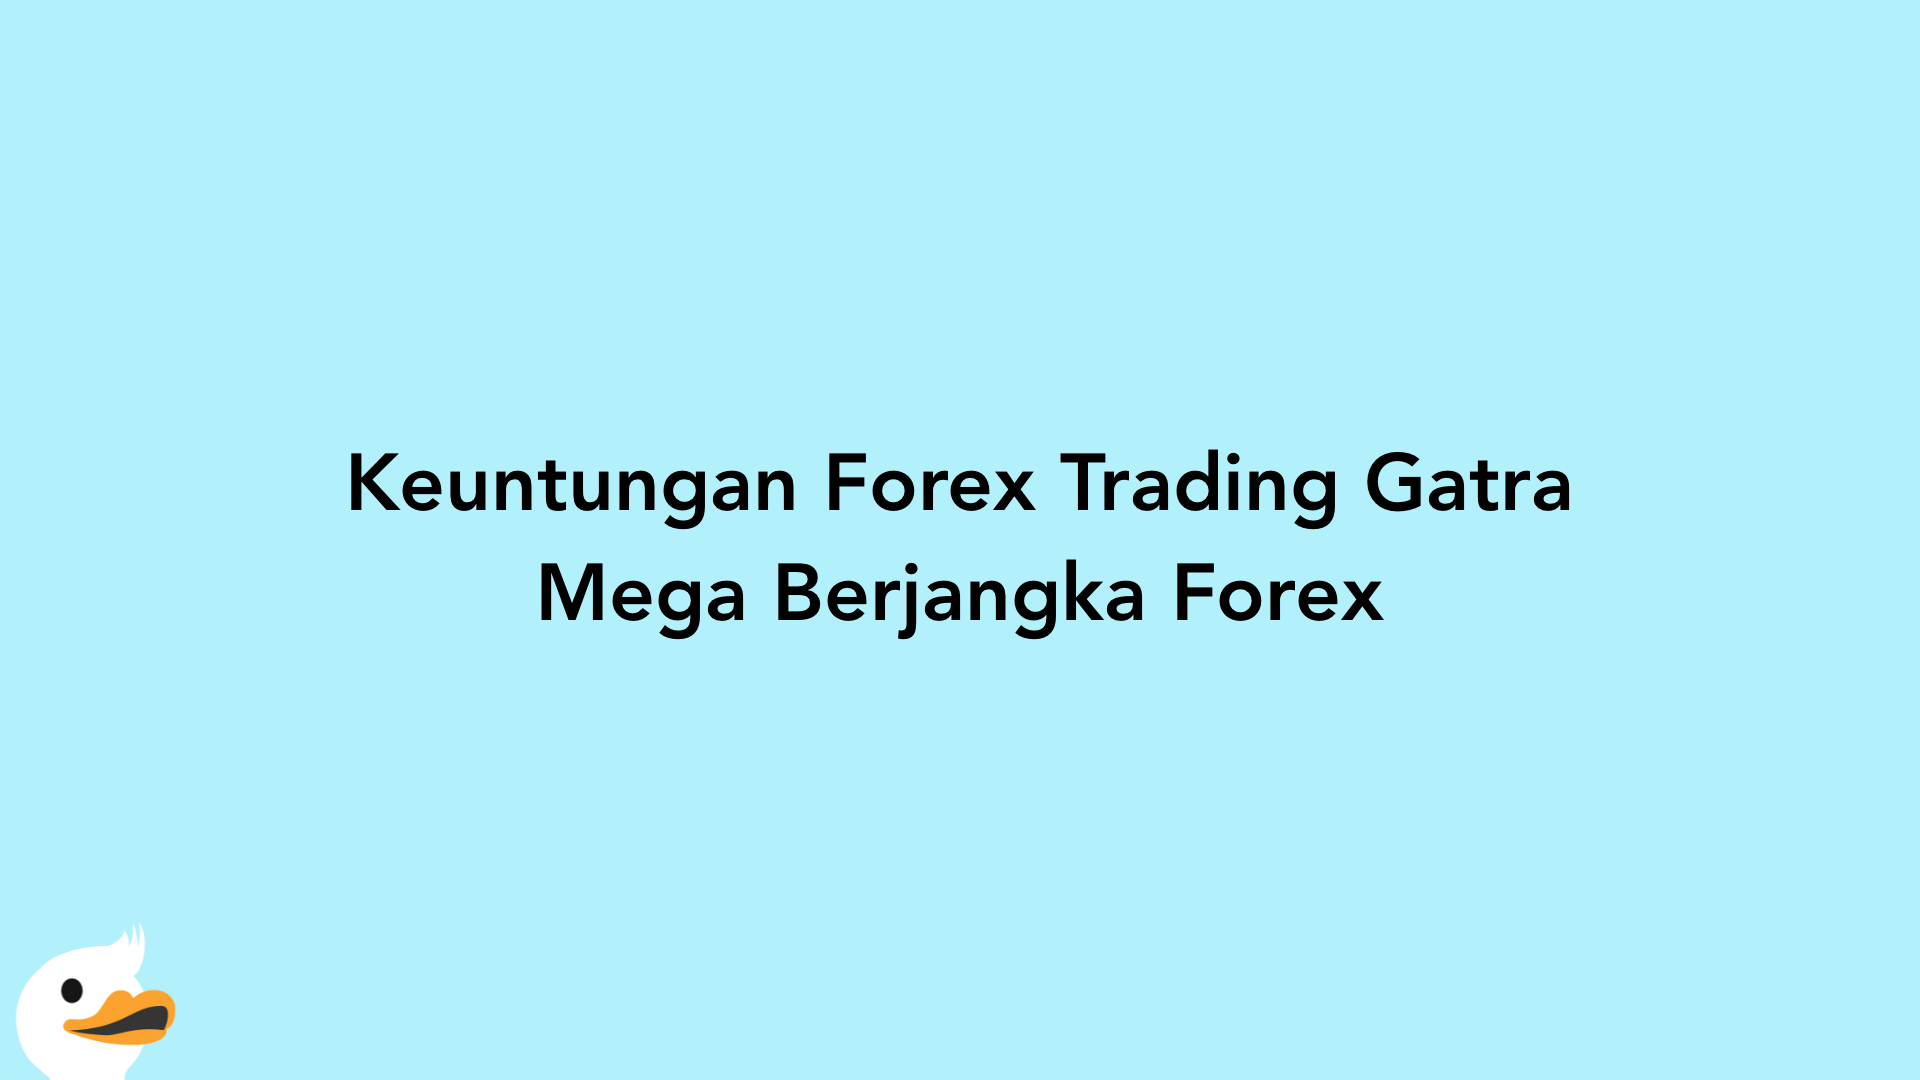 Keuntungan Forex Trading Gatra Mega Berjangka Forex